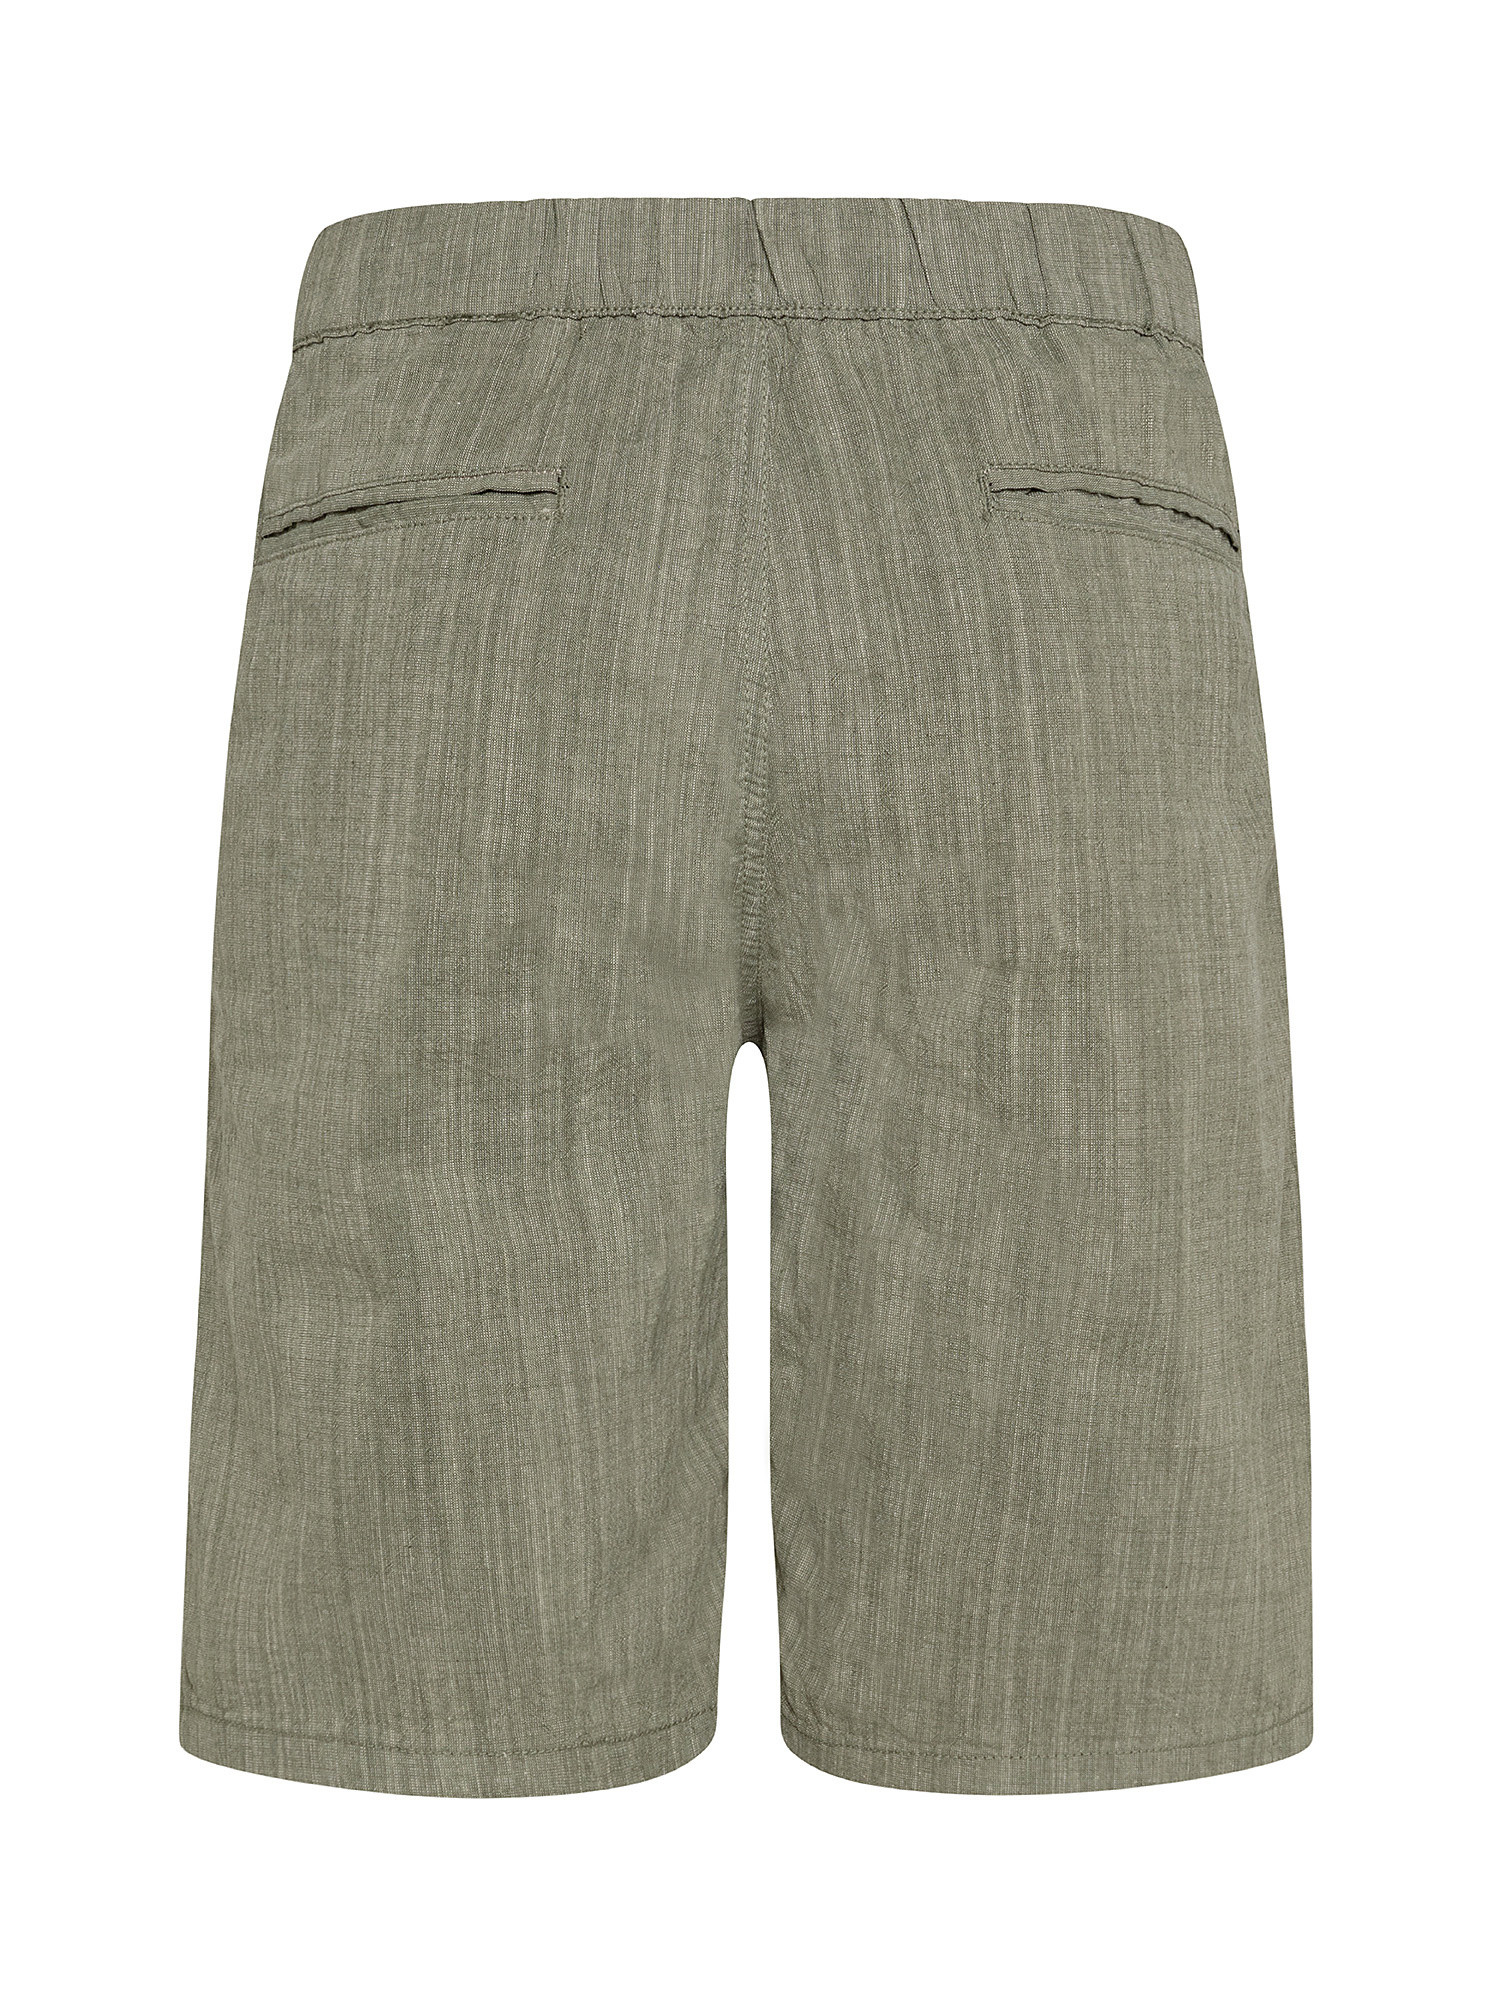 Bermuda shorts with drawstring at the waist, Green, large image number 1